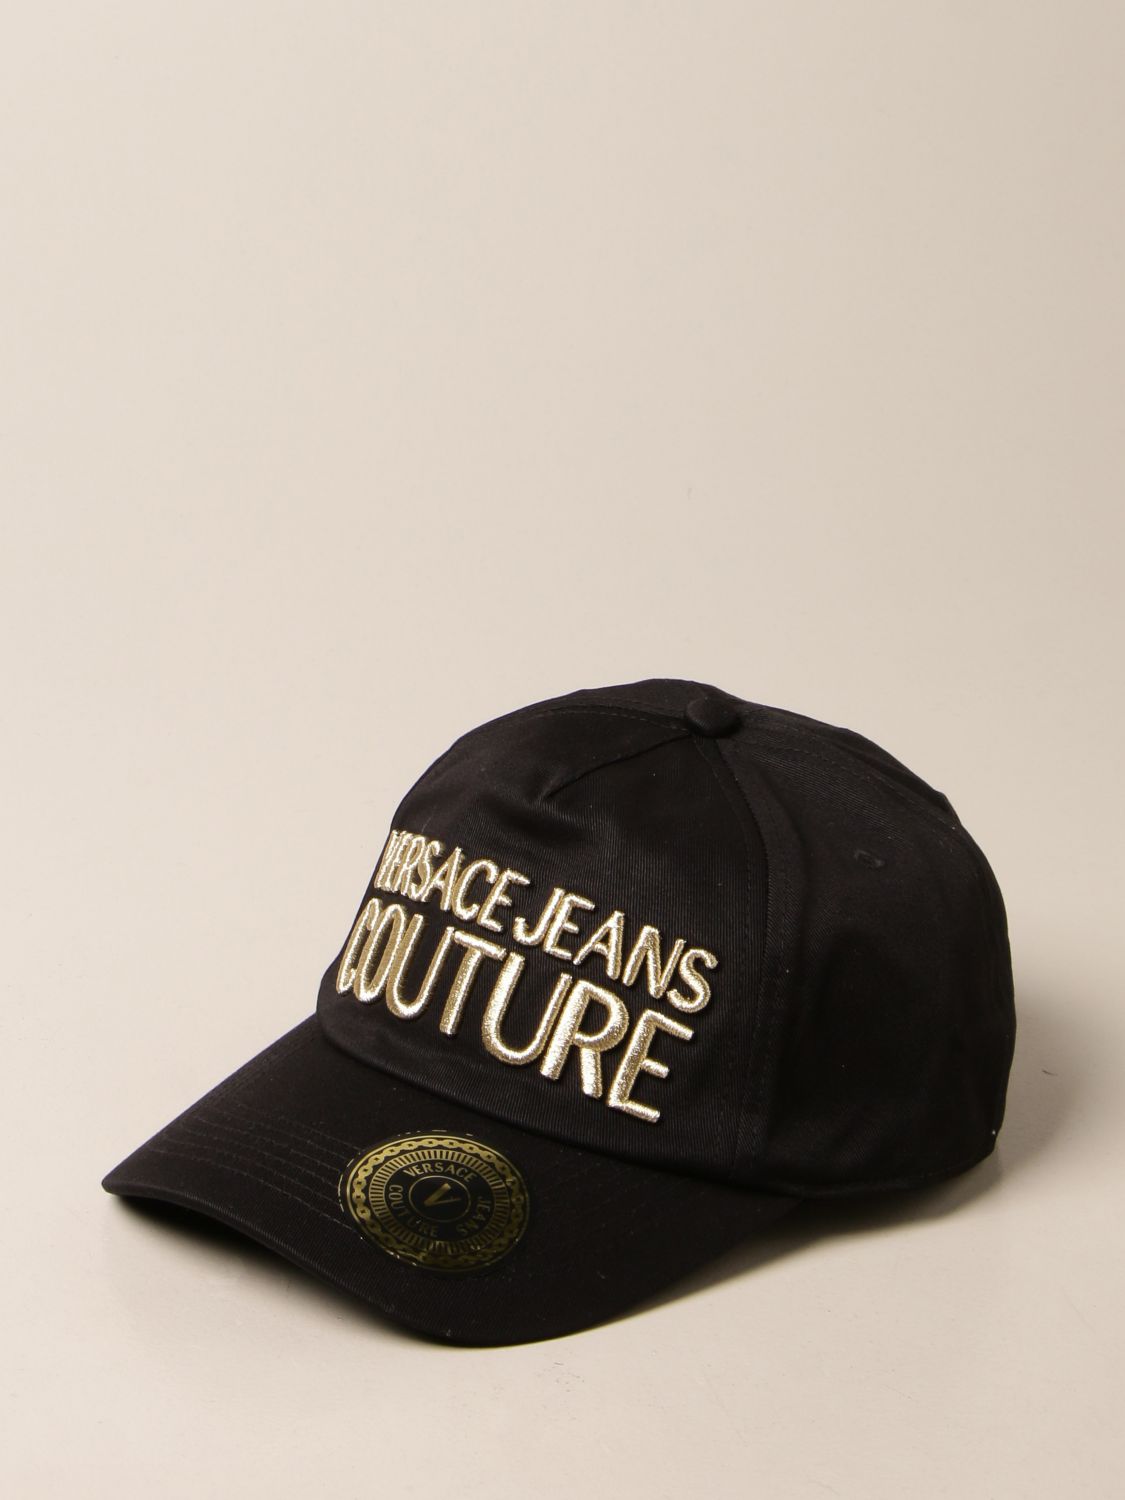 VERSACE JEANS COUTURE: baseball cap - Black | Versace Jeans Couture hat ...